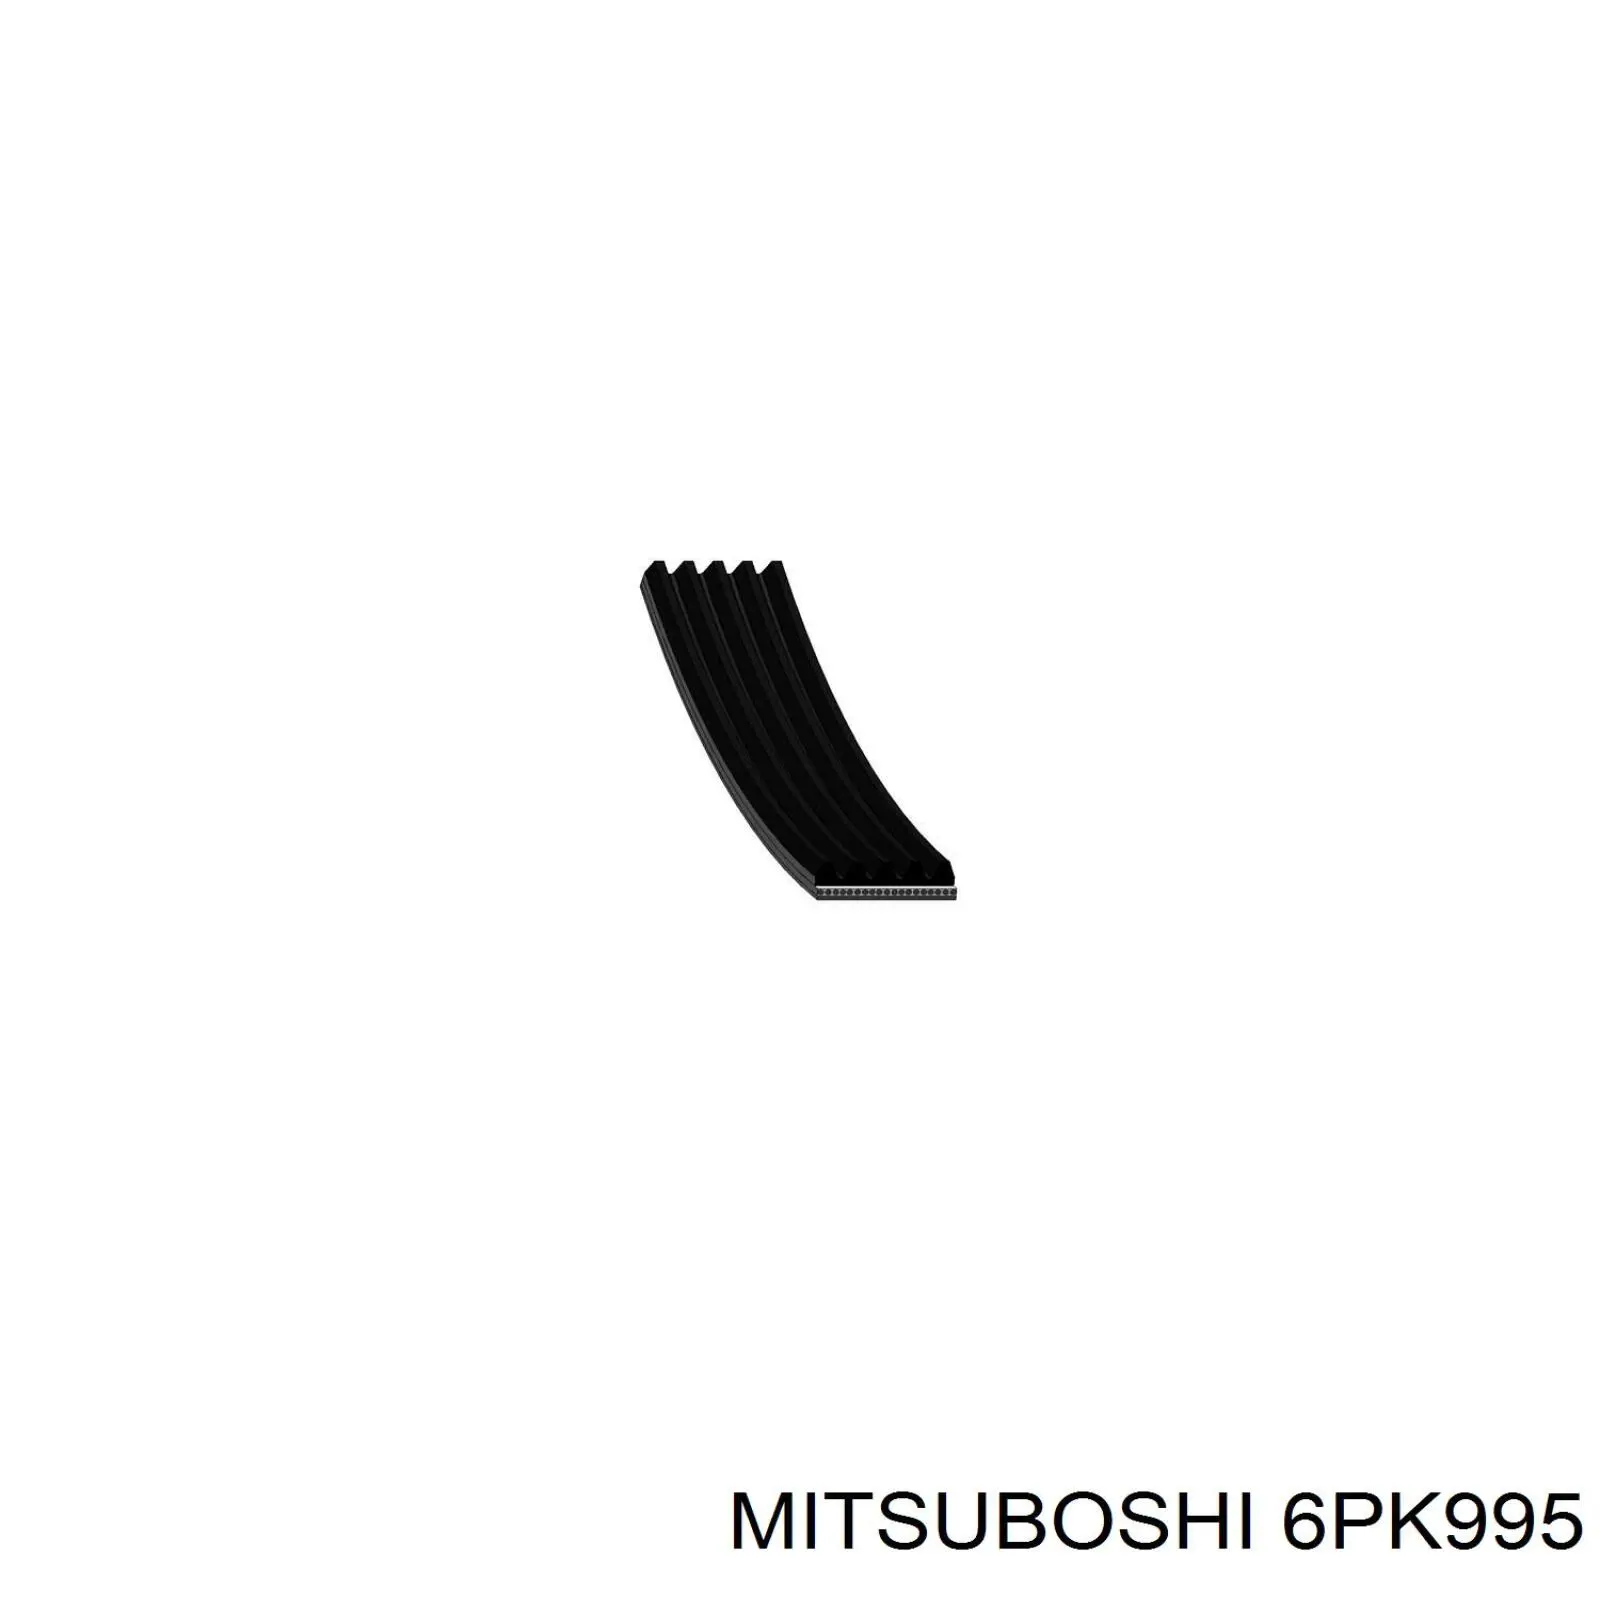 6PK995 Mitsuboshi ремень генератора